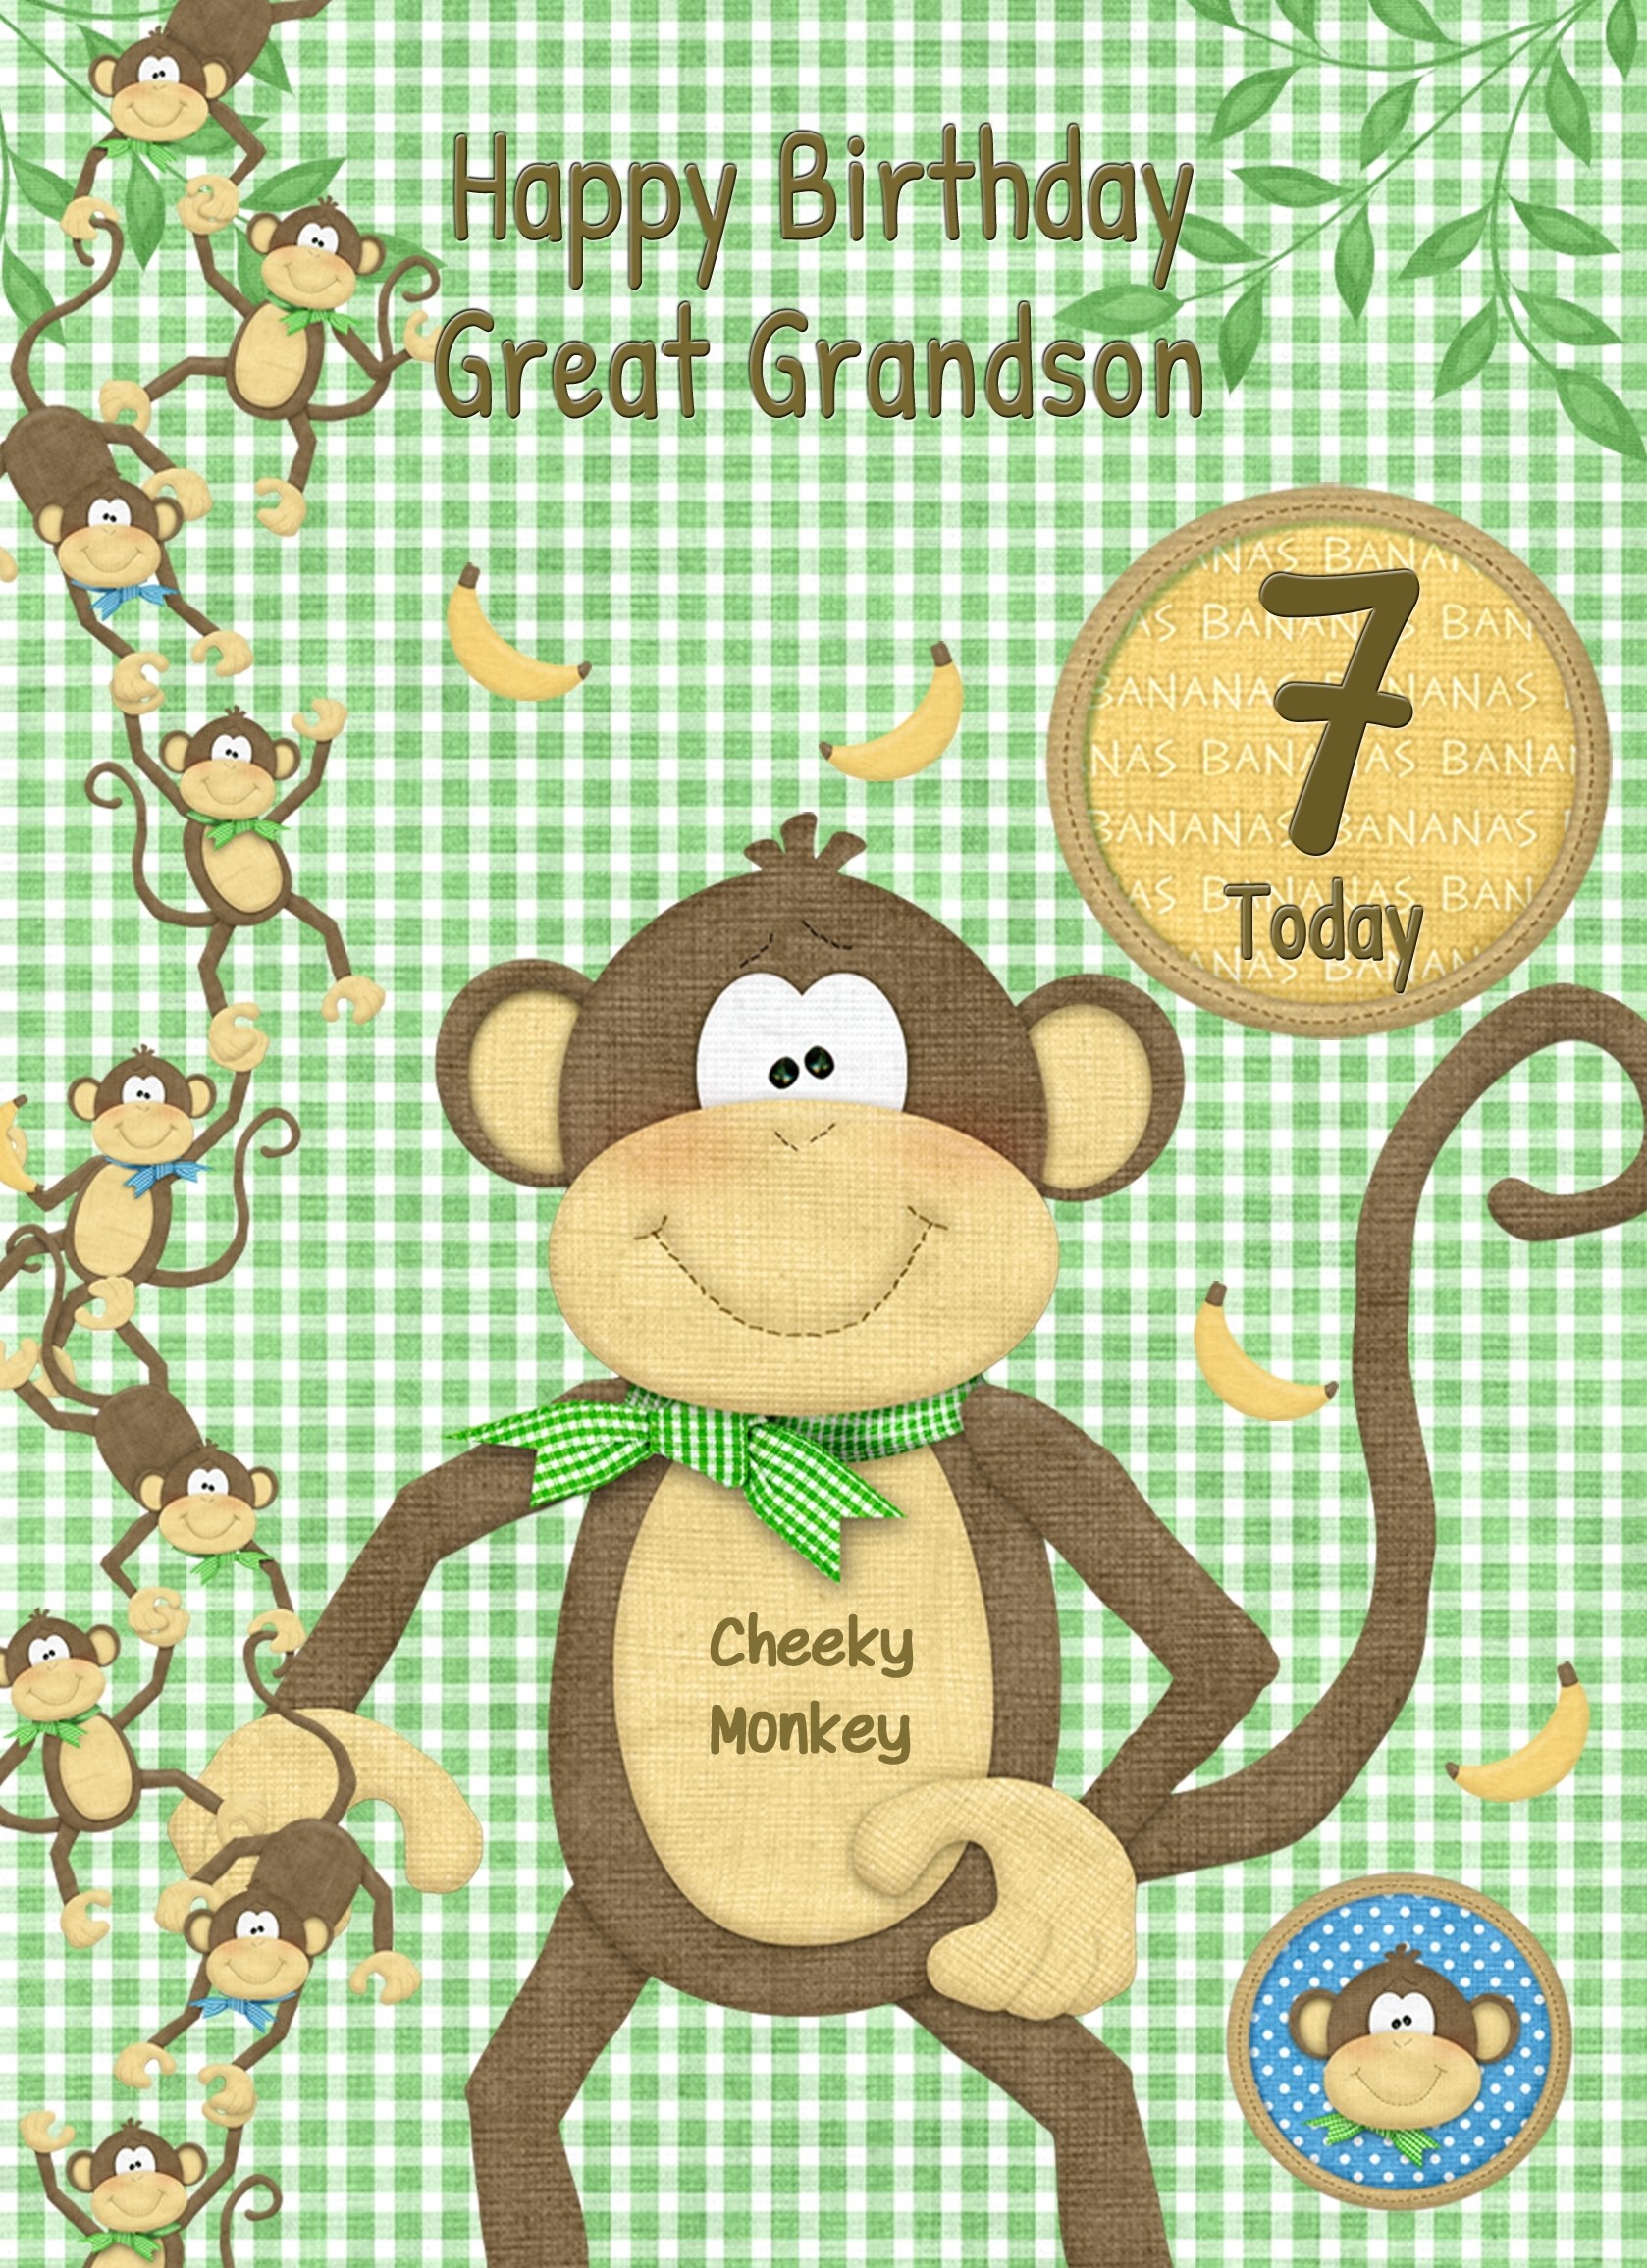 Kids 7th Birthday Cheeky Monkey Cartoon Card for Great Grandson